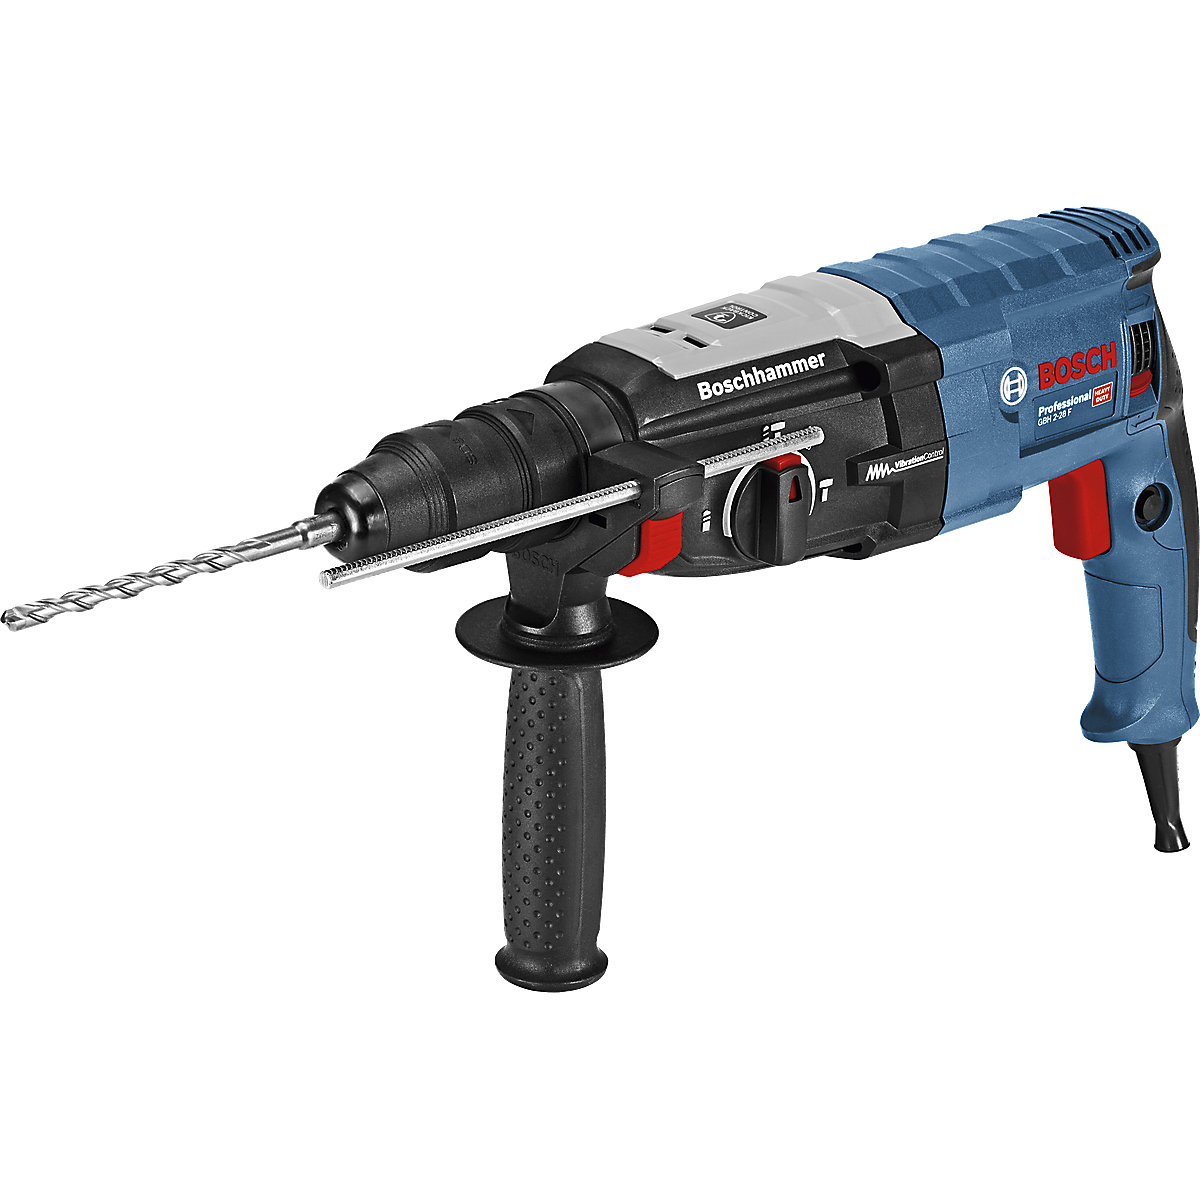 GBH 2-28 F SDS plus Professional hammer drill – Bosch